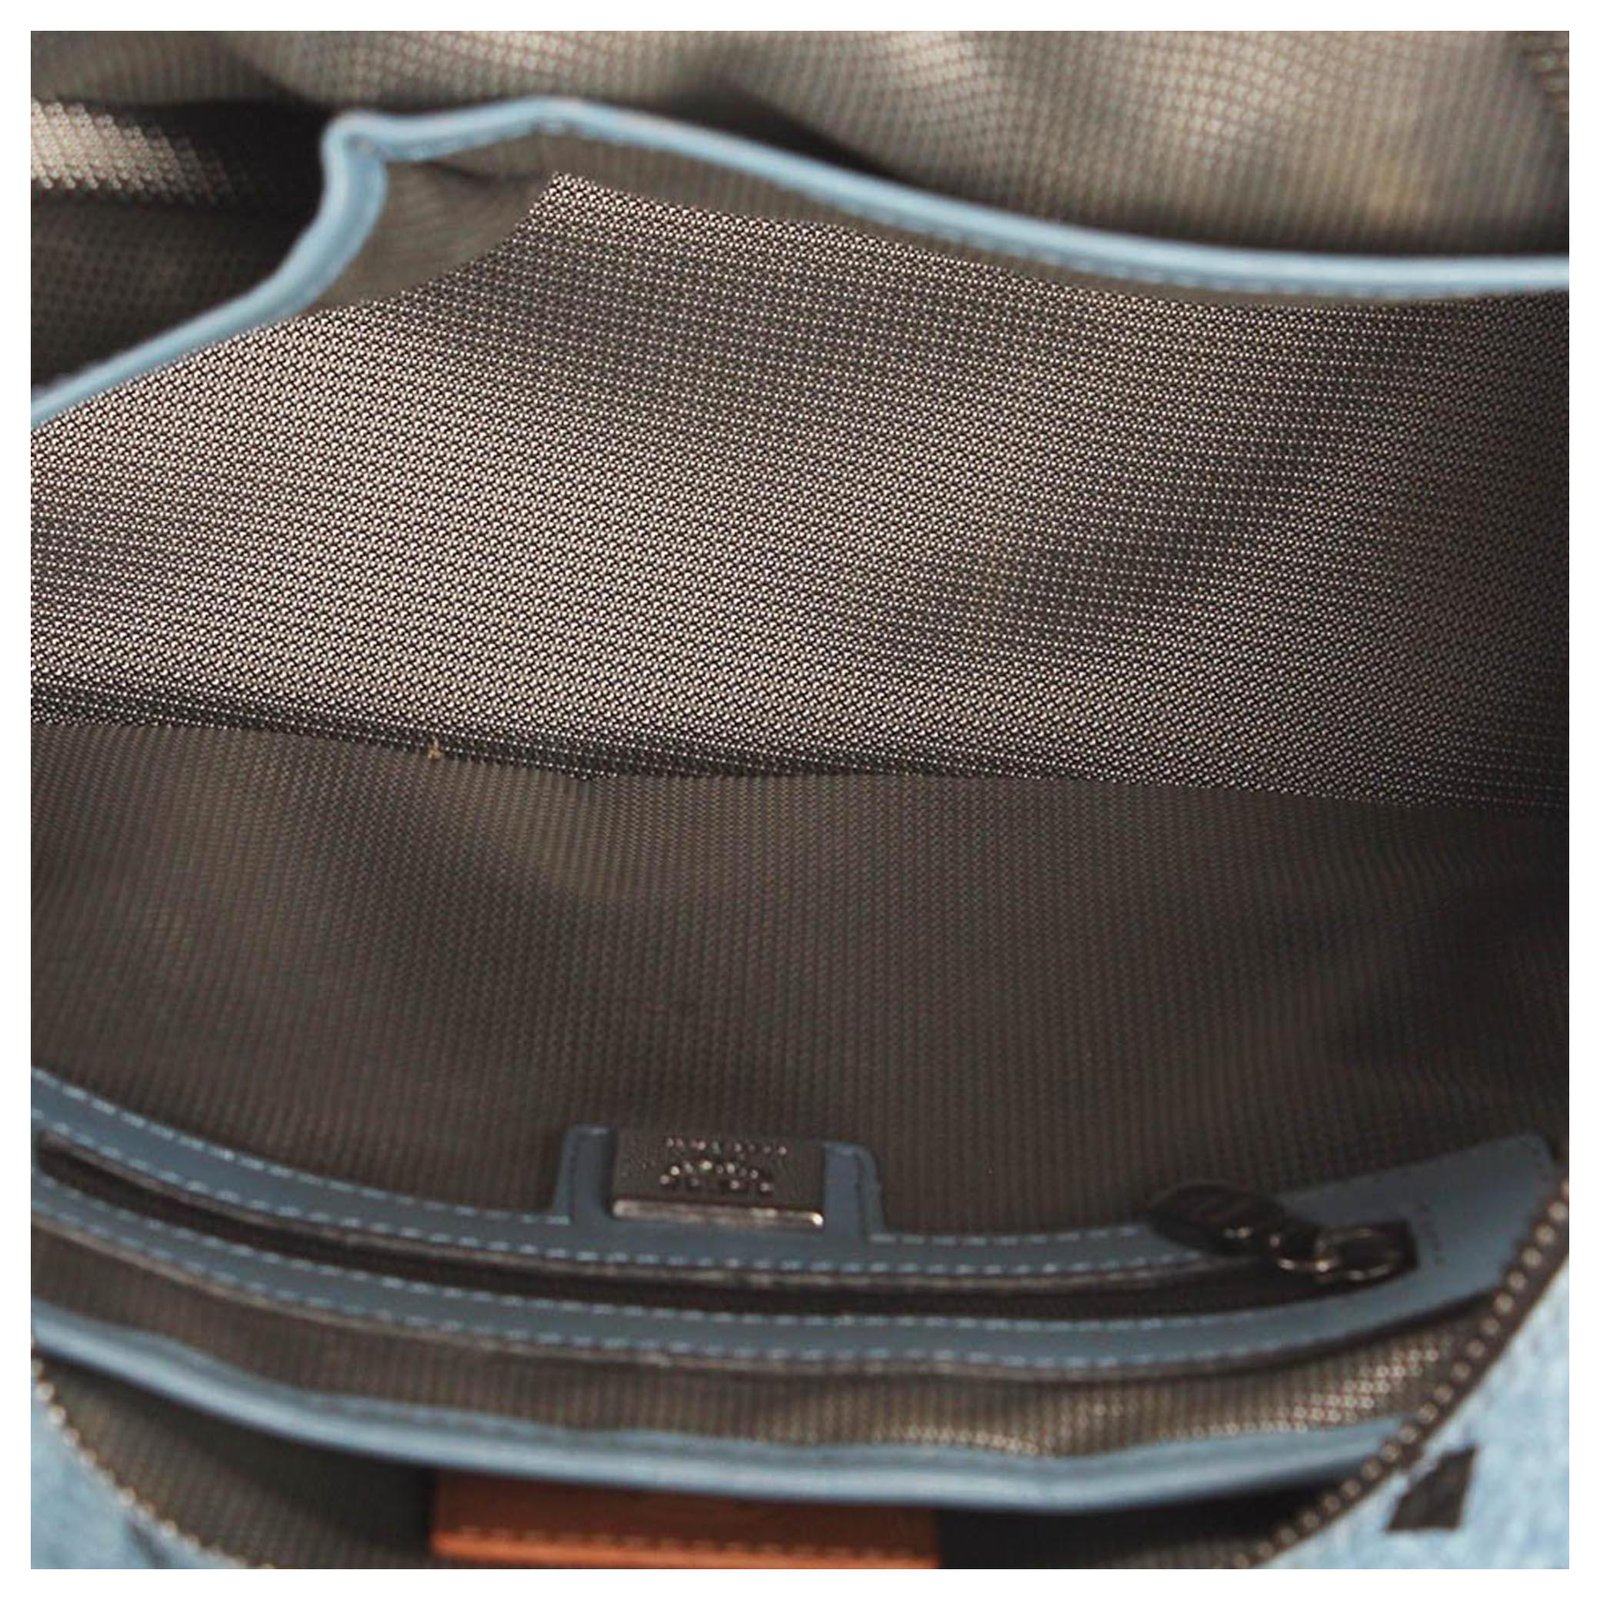 MCM Blue Visetos Stark Leather Backpack Pony-style calfskin ref